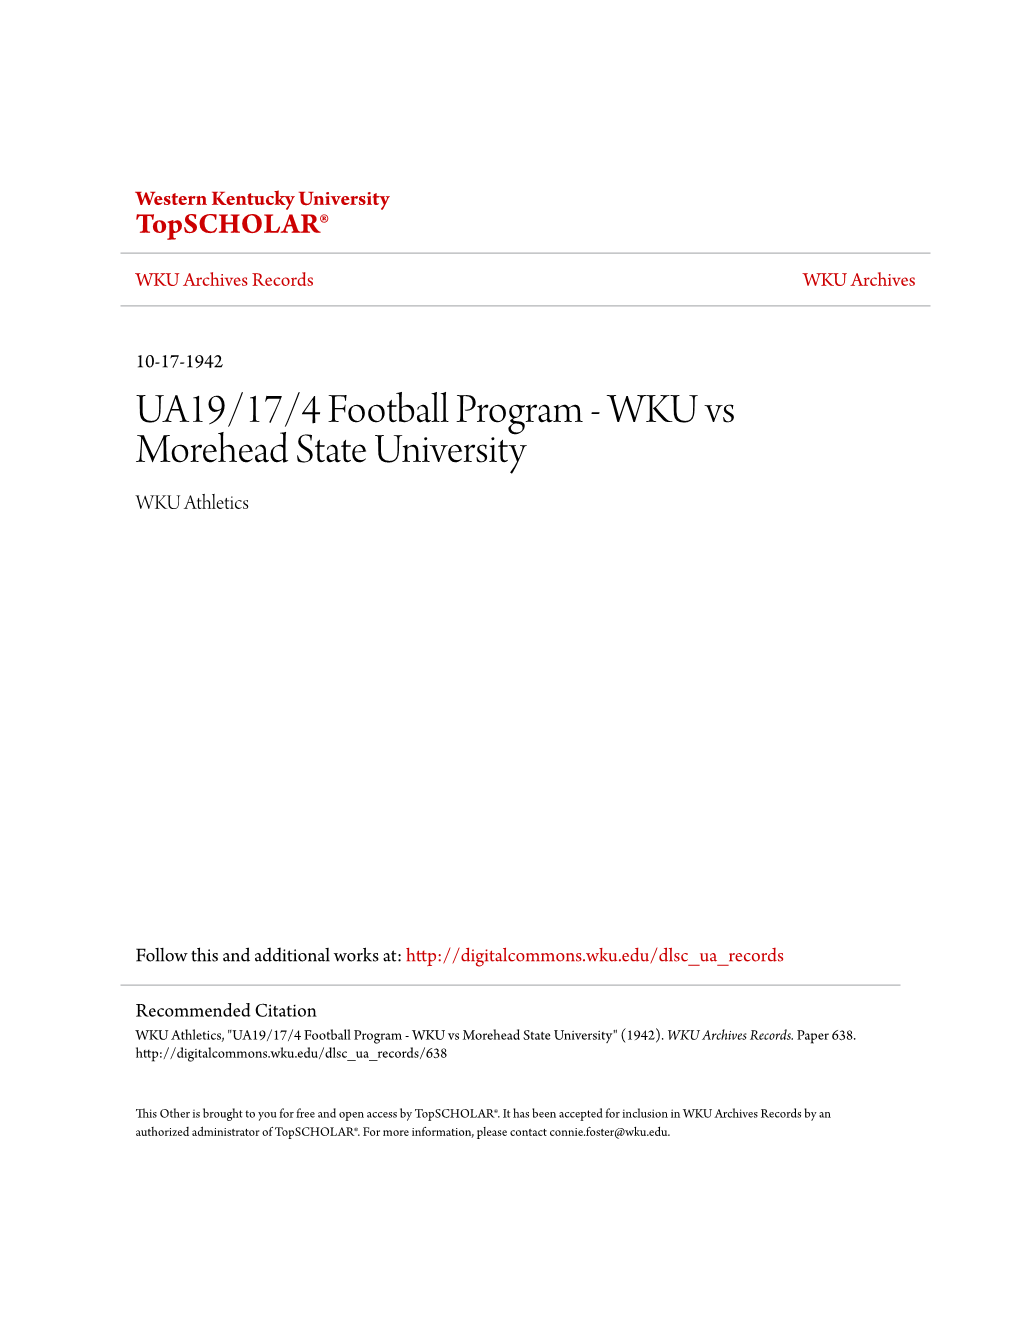 UA19/17/4 Football Program - WKU Vs Morehead State University WKU Athletics